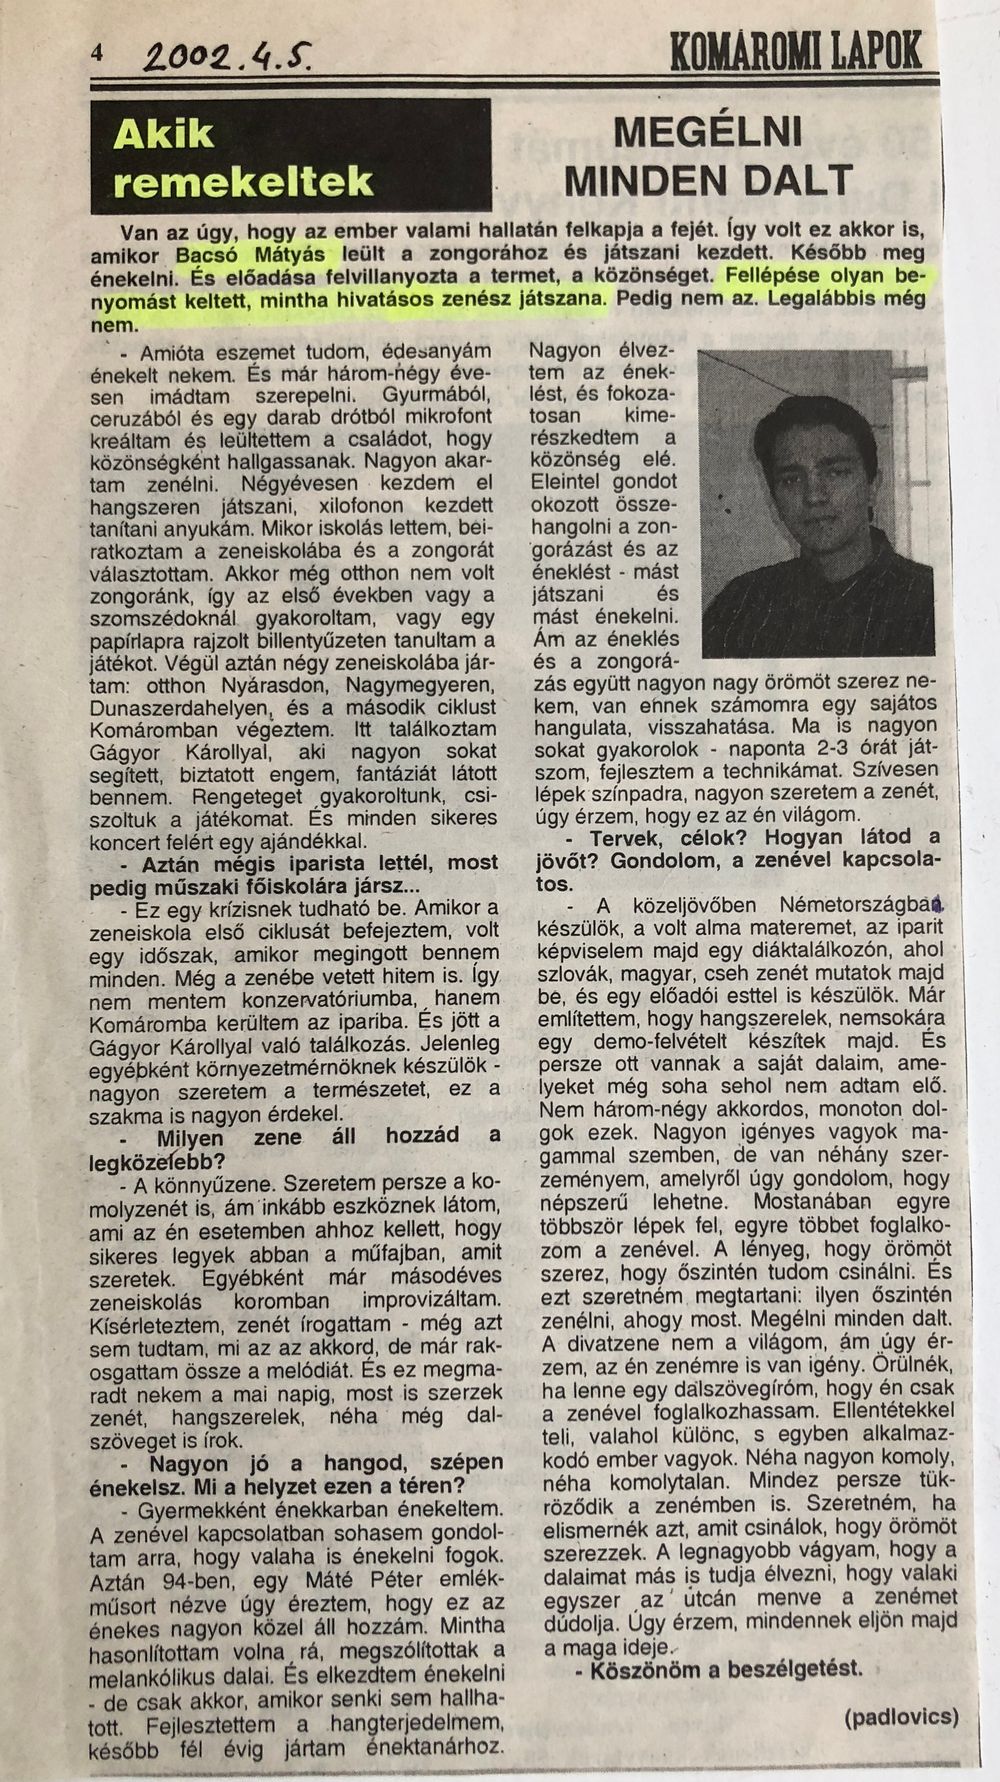 KOMÁROMI LAPOK - 5 MAY 2002